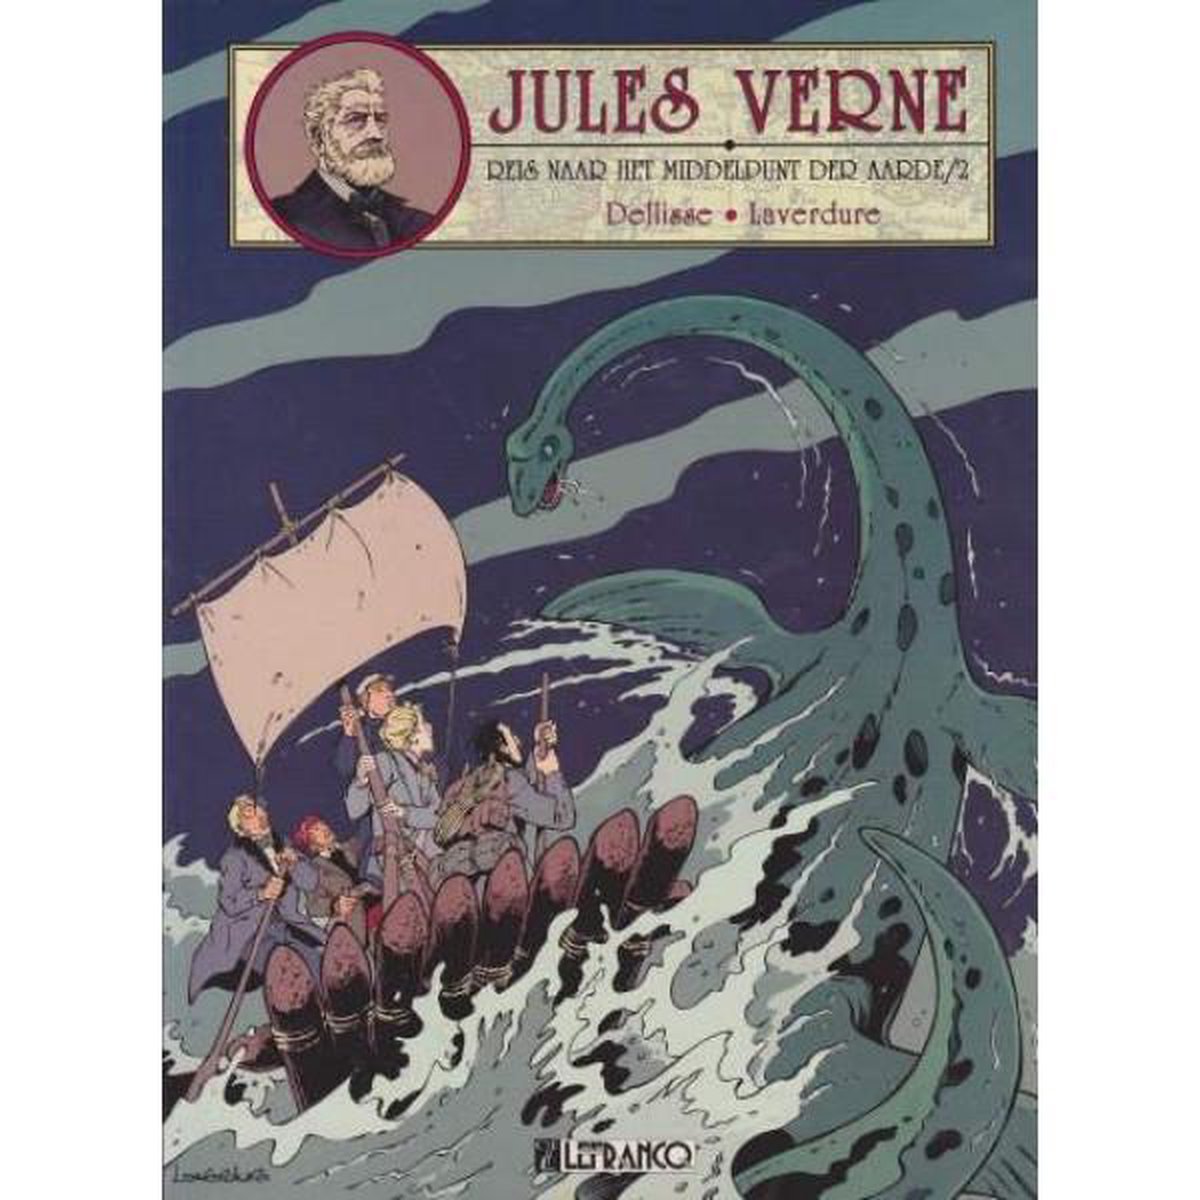 Jules Verne Reis naar het middelpunt der aarde Deel 2